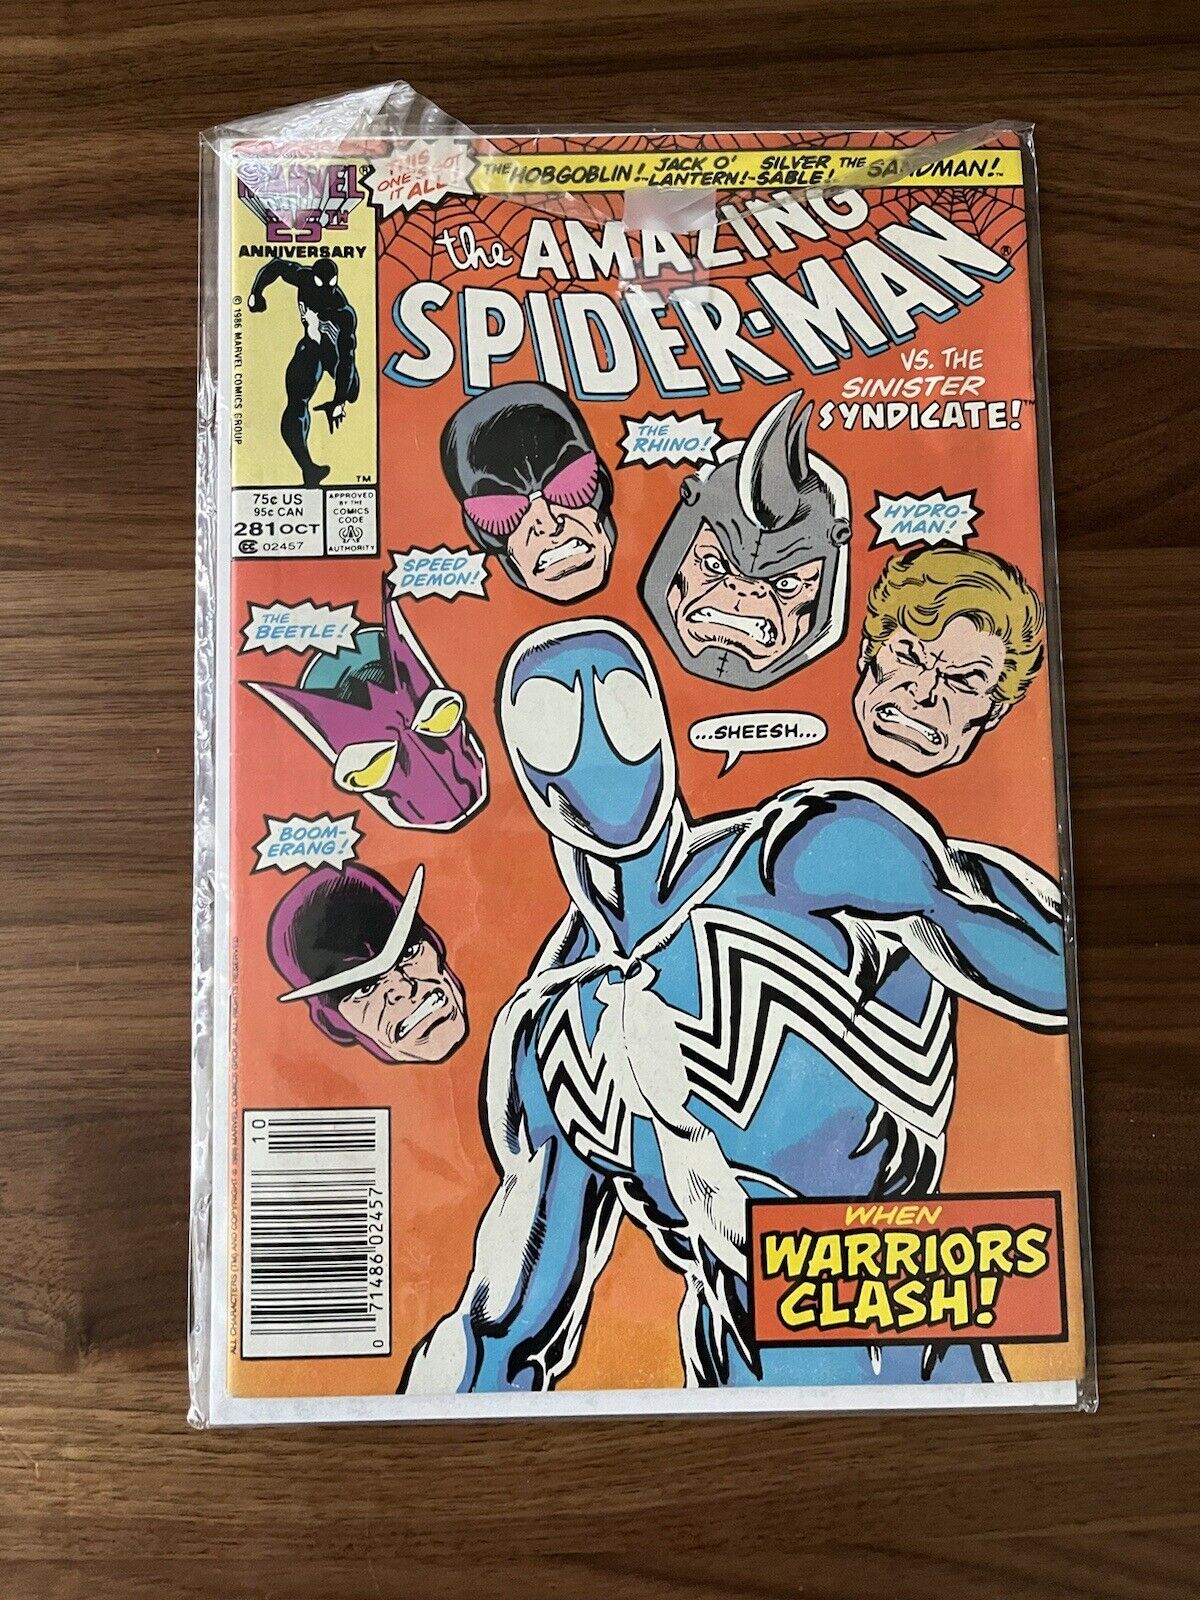 The Amazing Spider-man #281